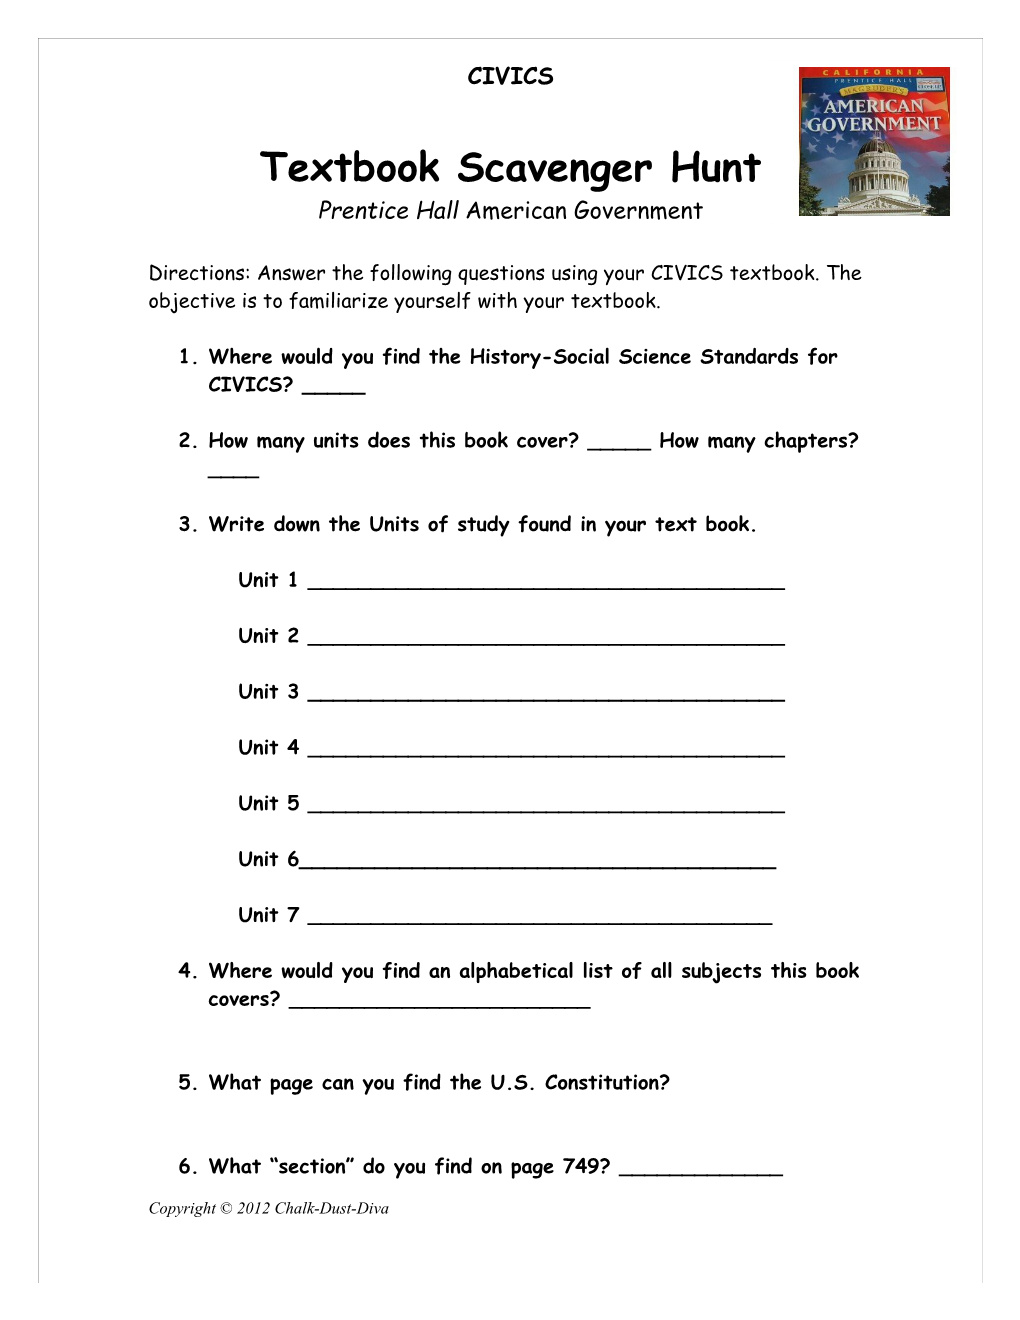 Textbook Scavenger Hunt